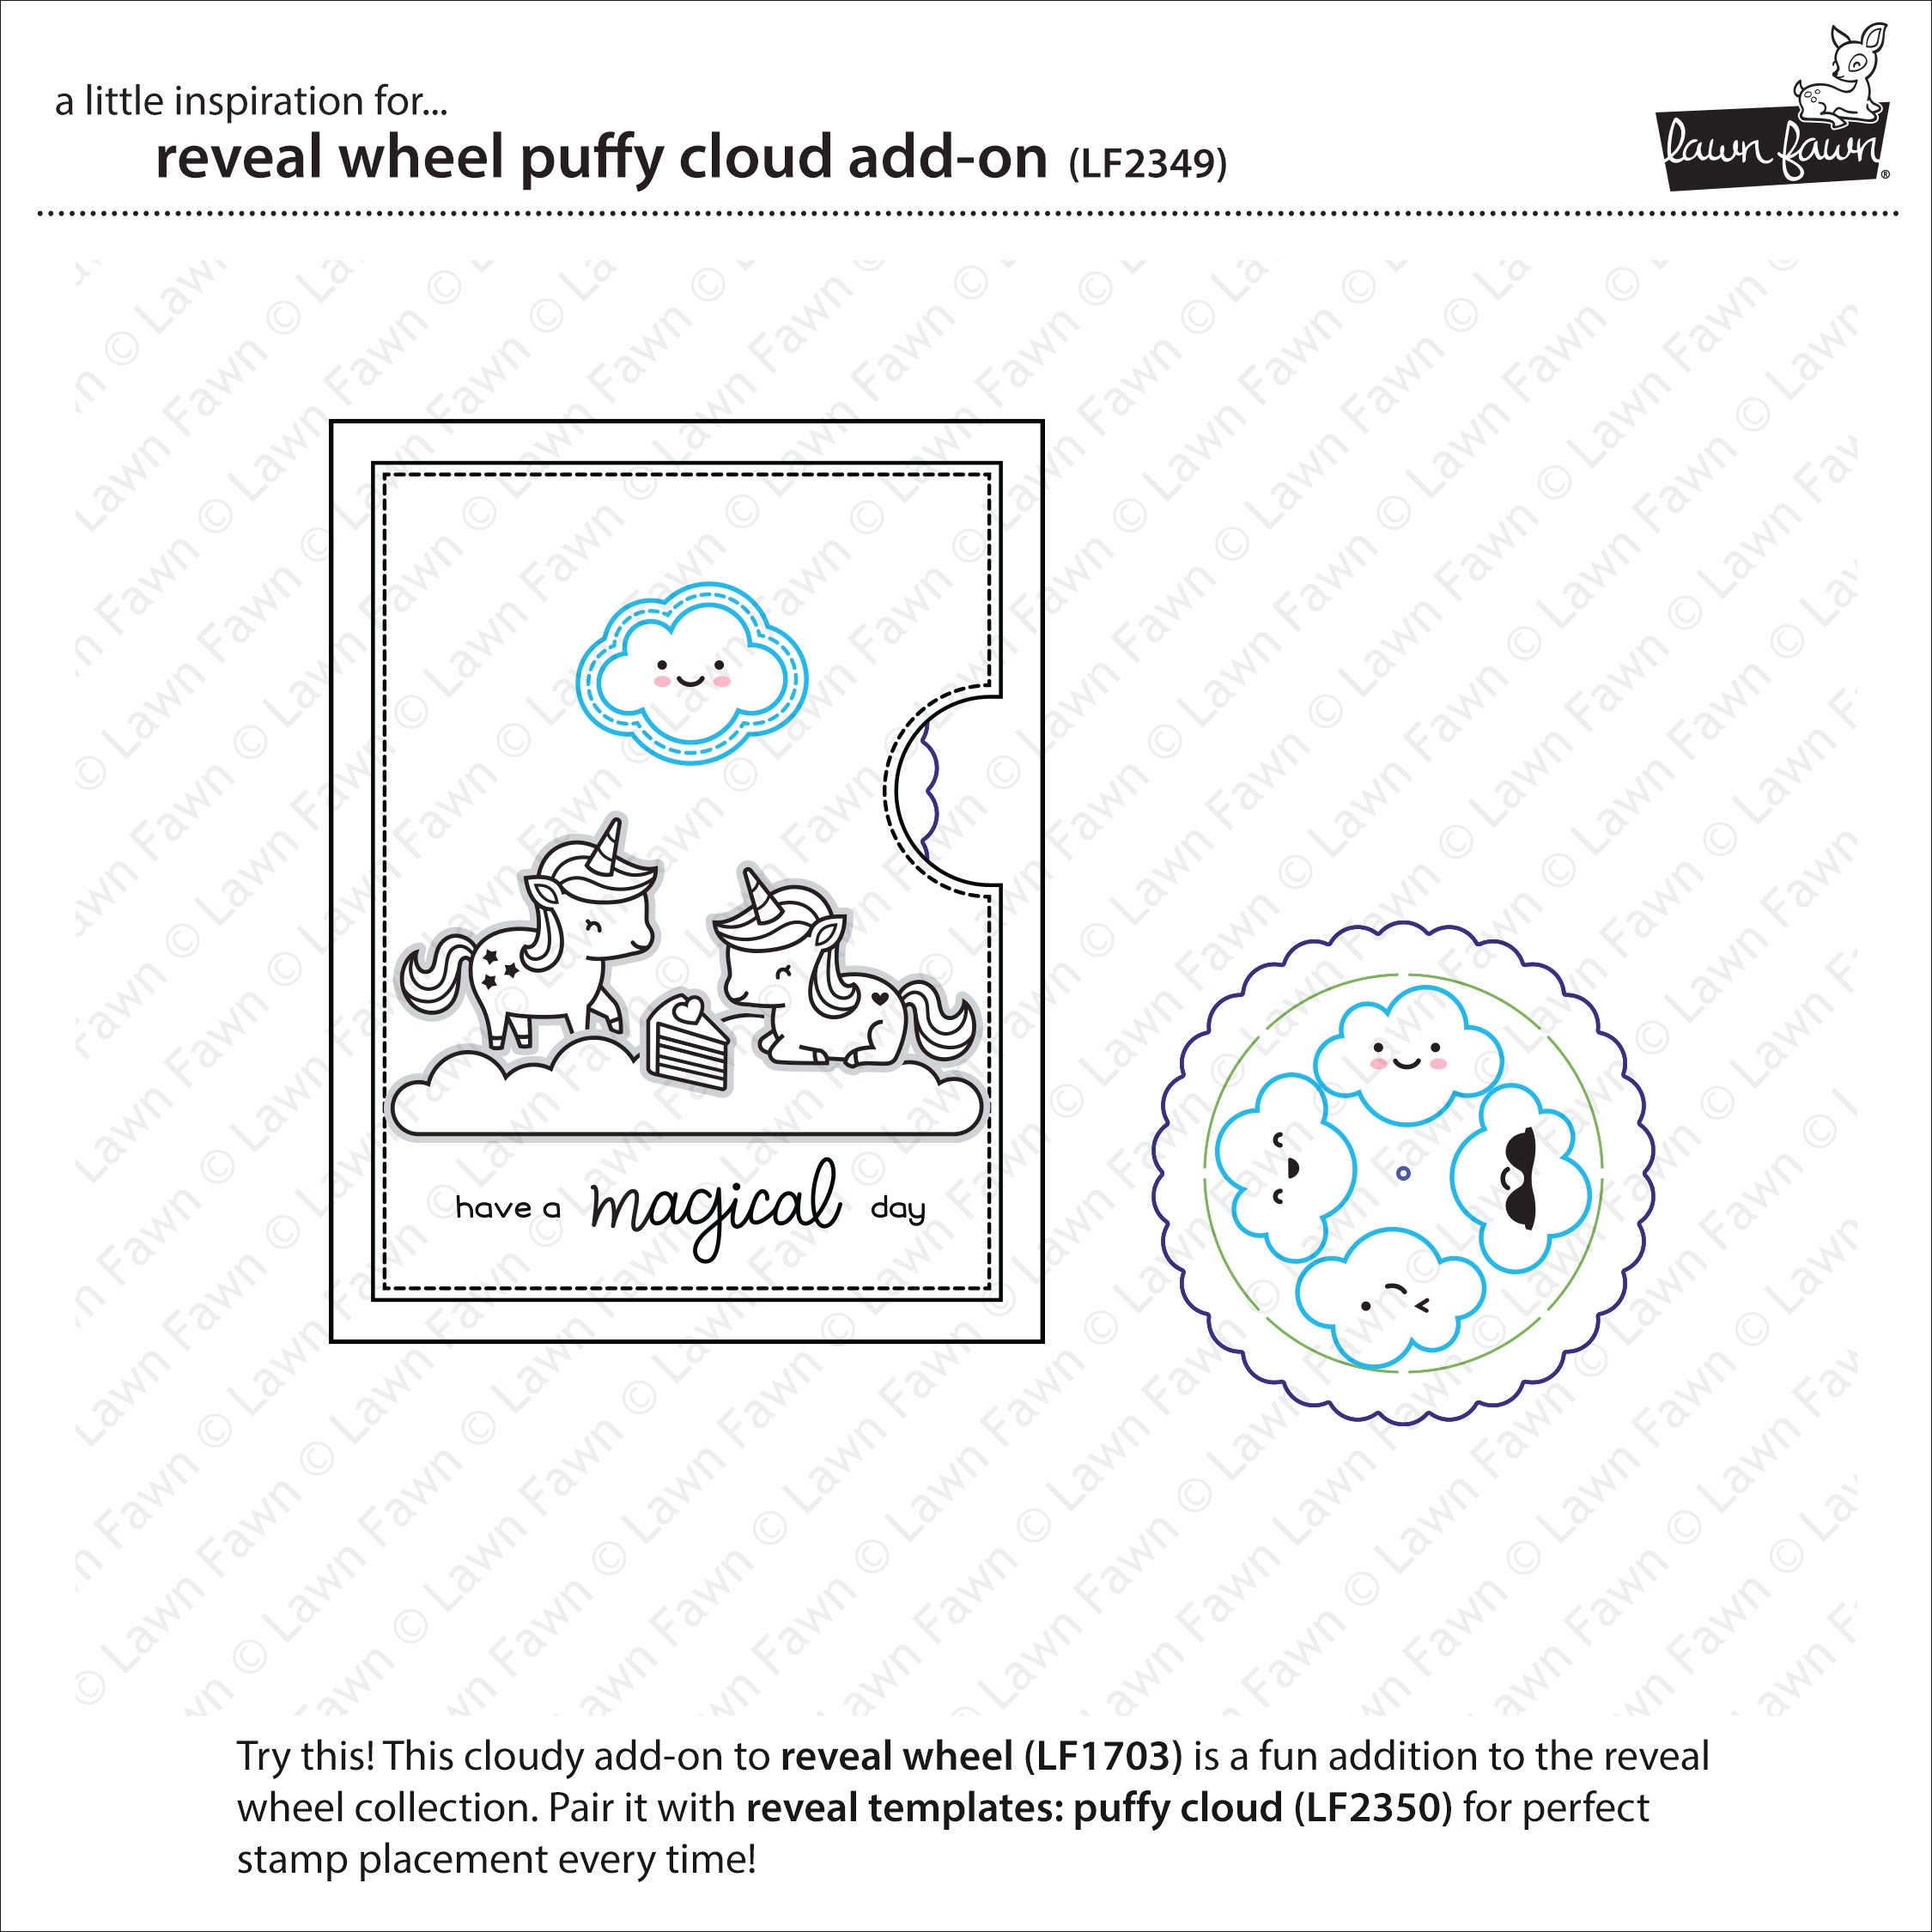 reveal wheel puffy cloud add-on